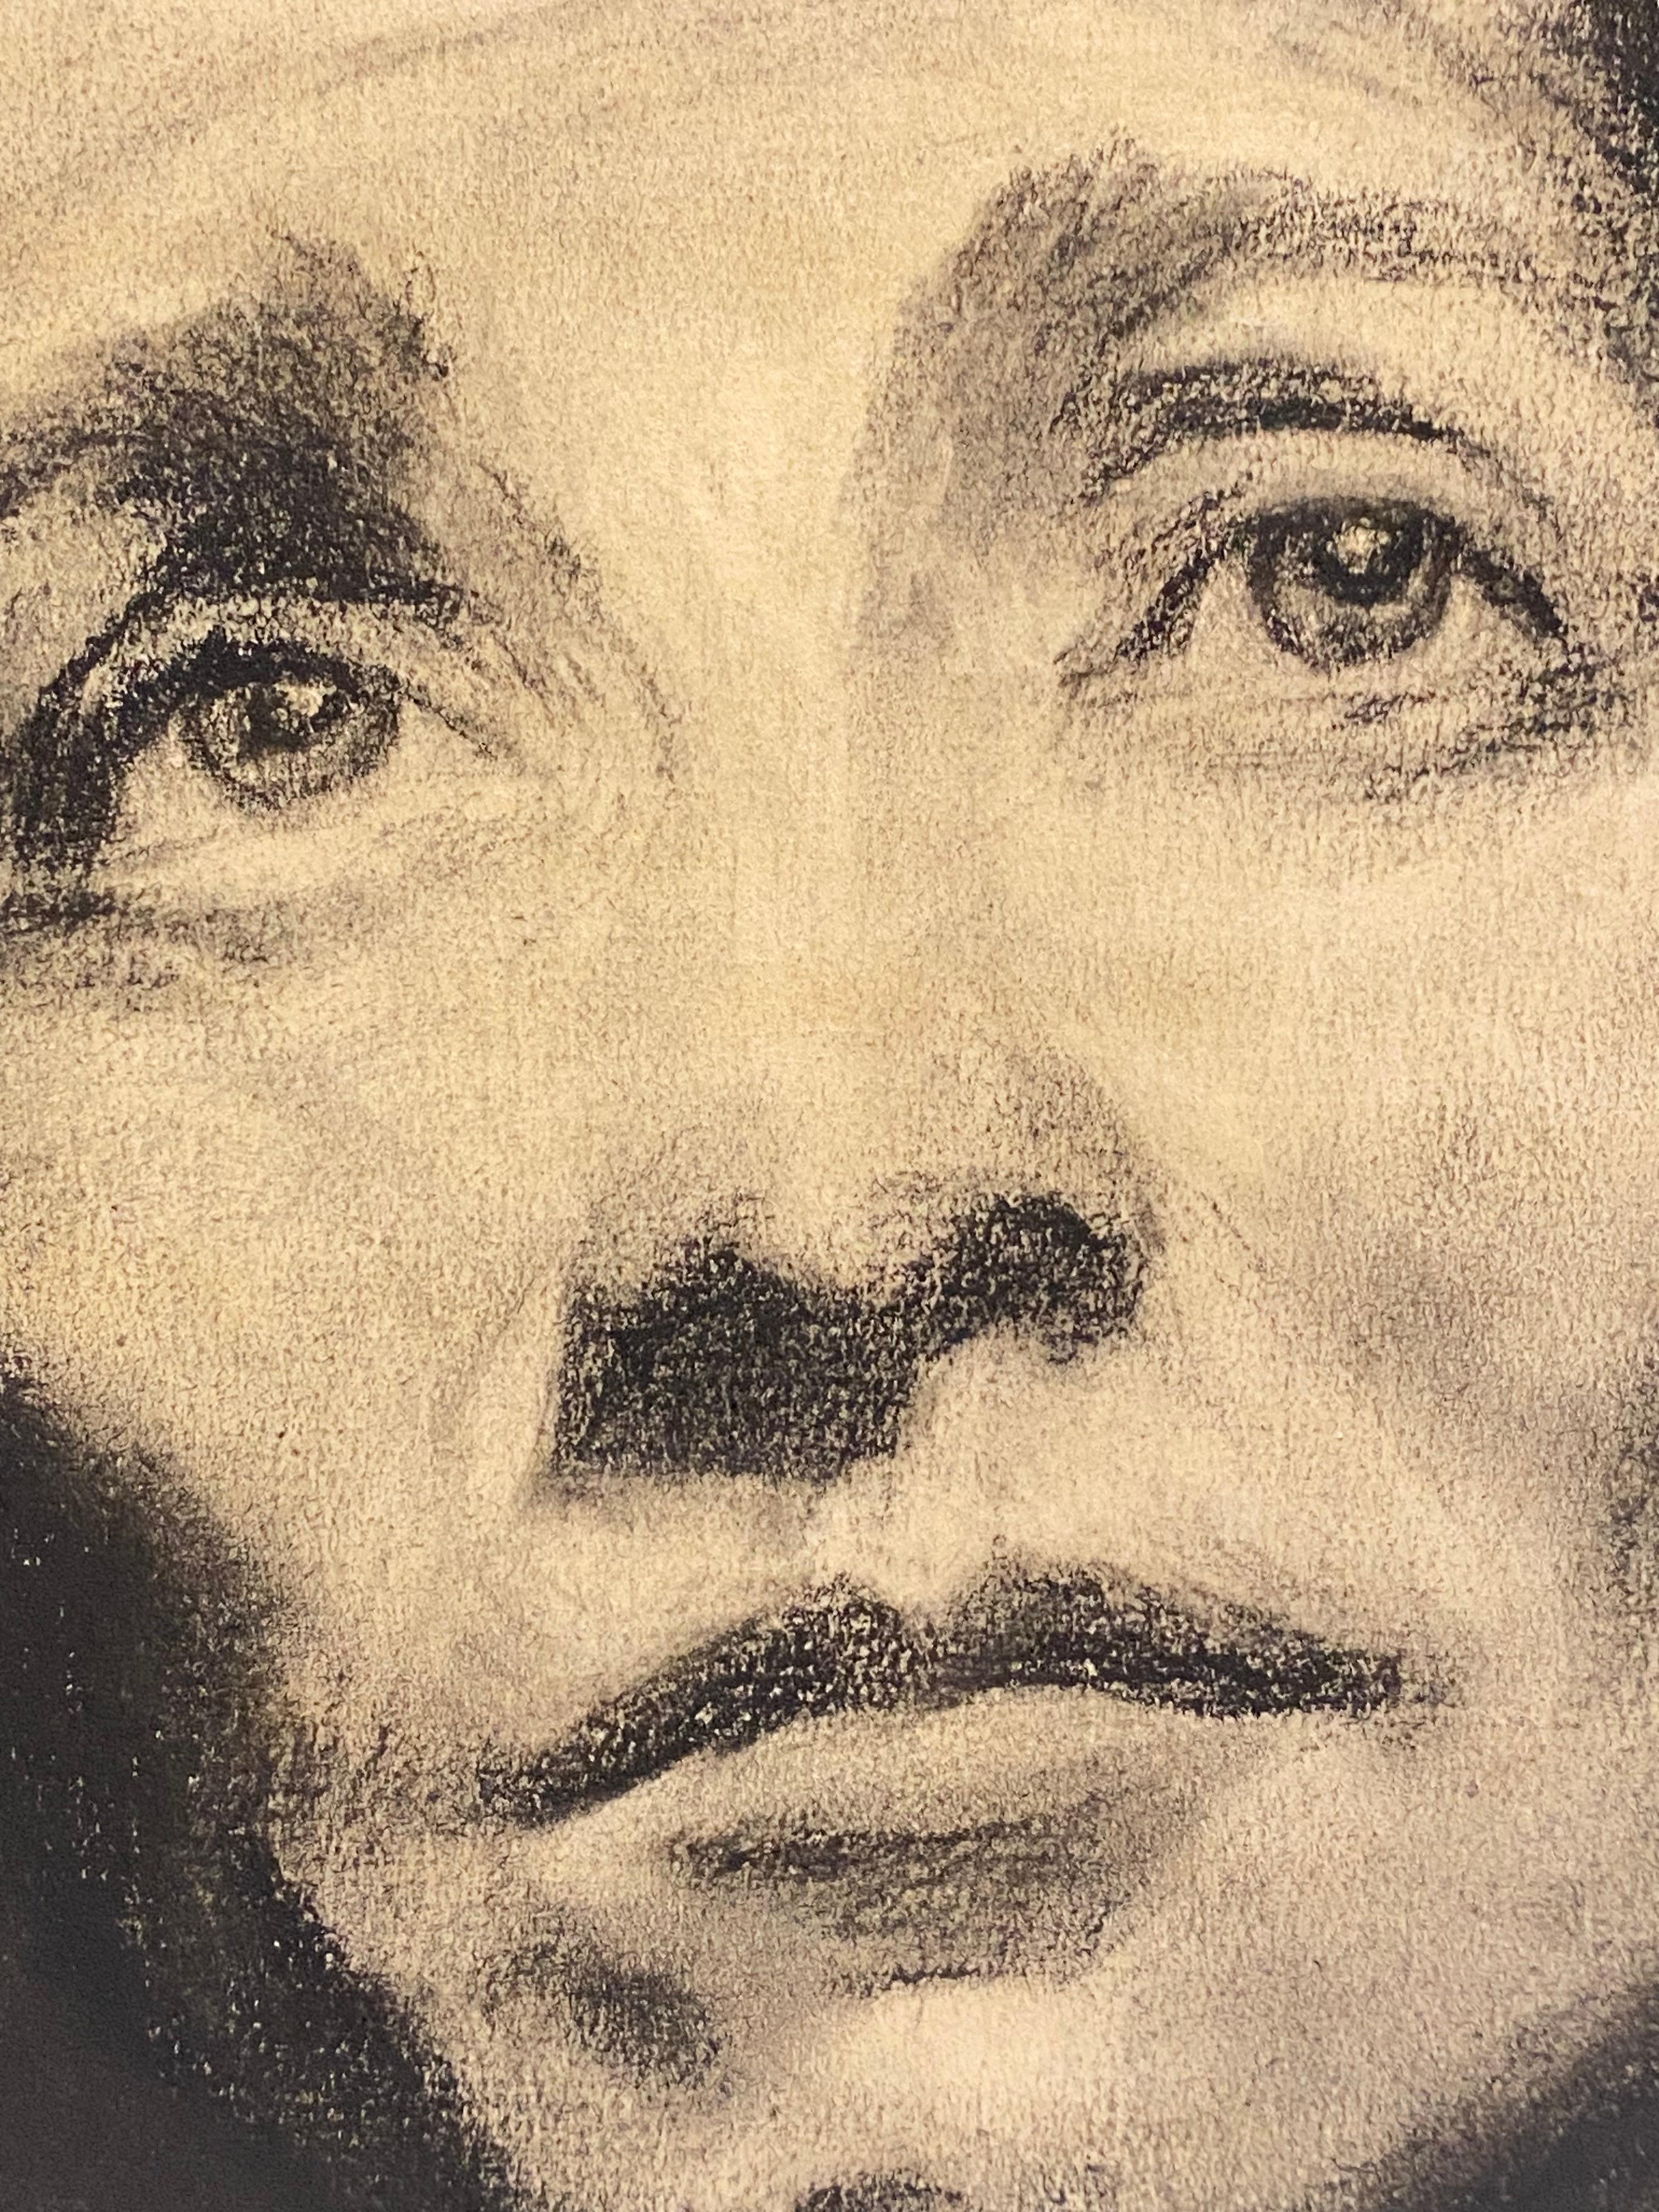 20th Century Pensive Female Charcoal on Paper Portrait Manner of Kollwitz